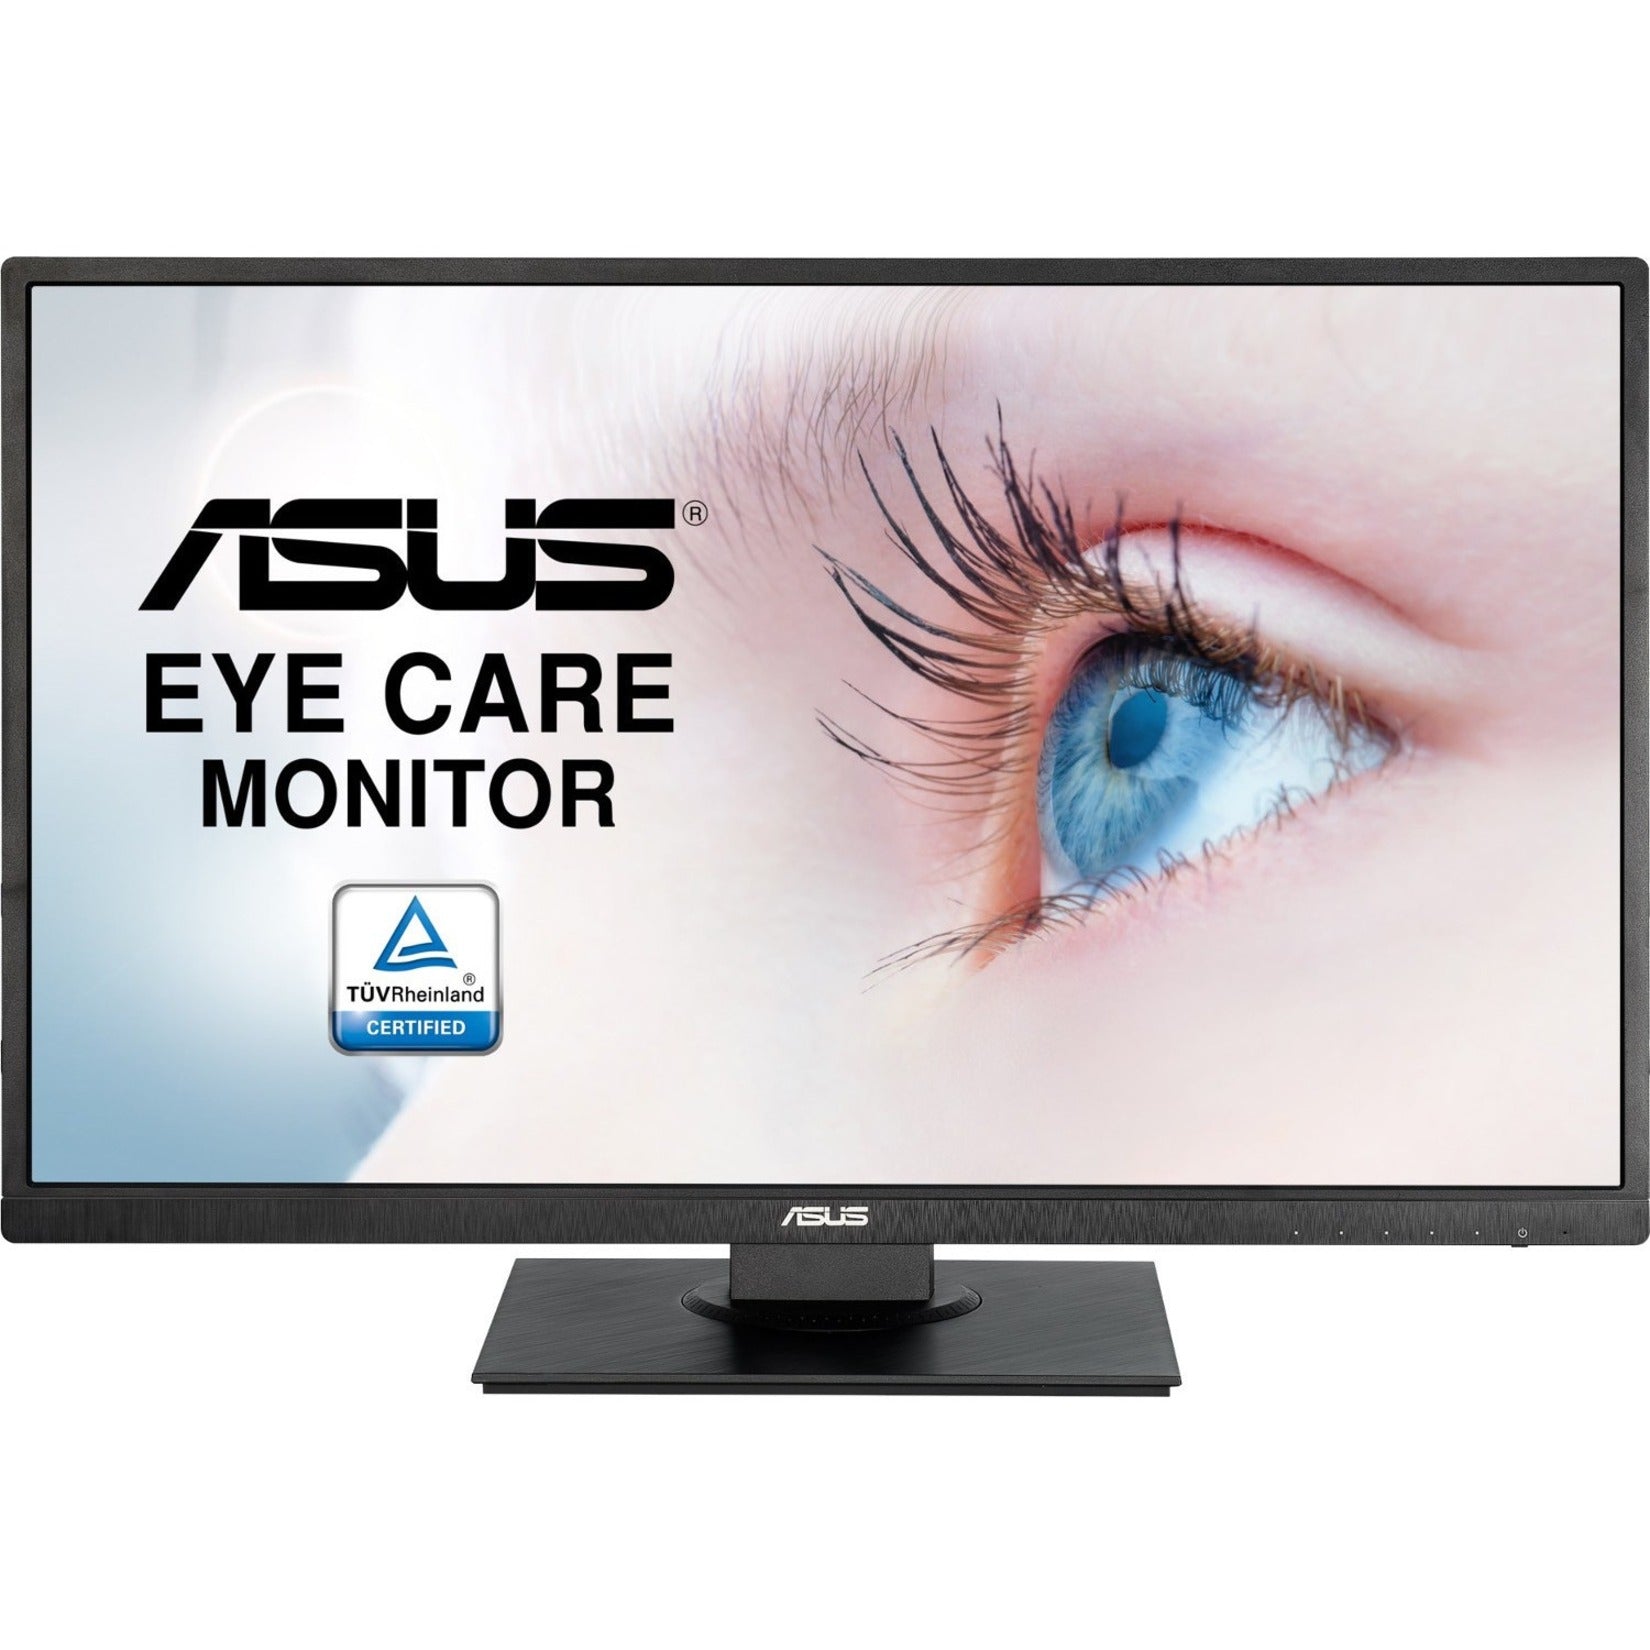 Asus VA279HAL Widescreen LCD Monitor, 27" Full HD, 300 Nit Brightness, 16:9 Aspect Ratio, Black